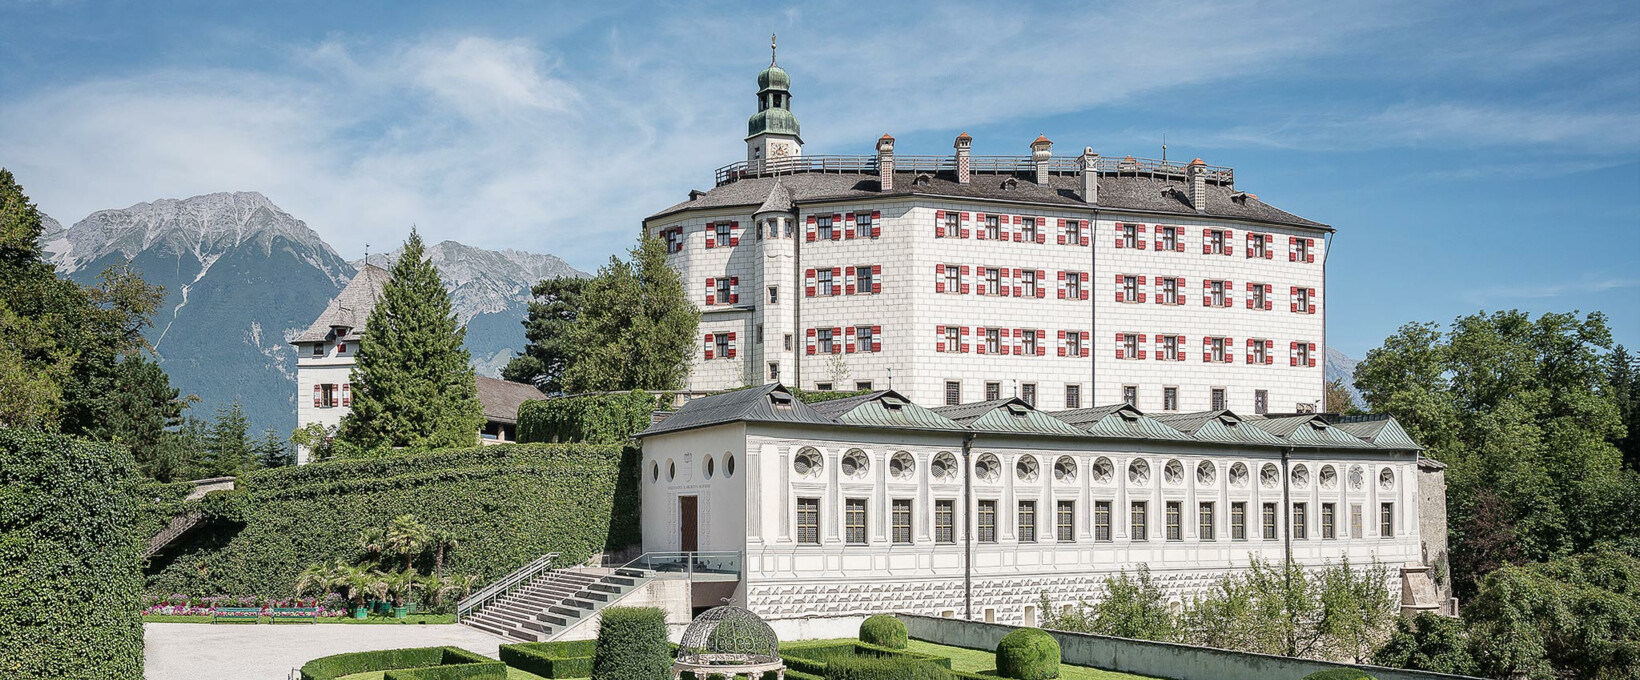 Castle  Ambras | Innsbruck | © KHM-Museumsverband